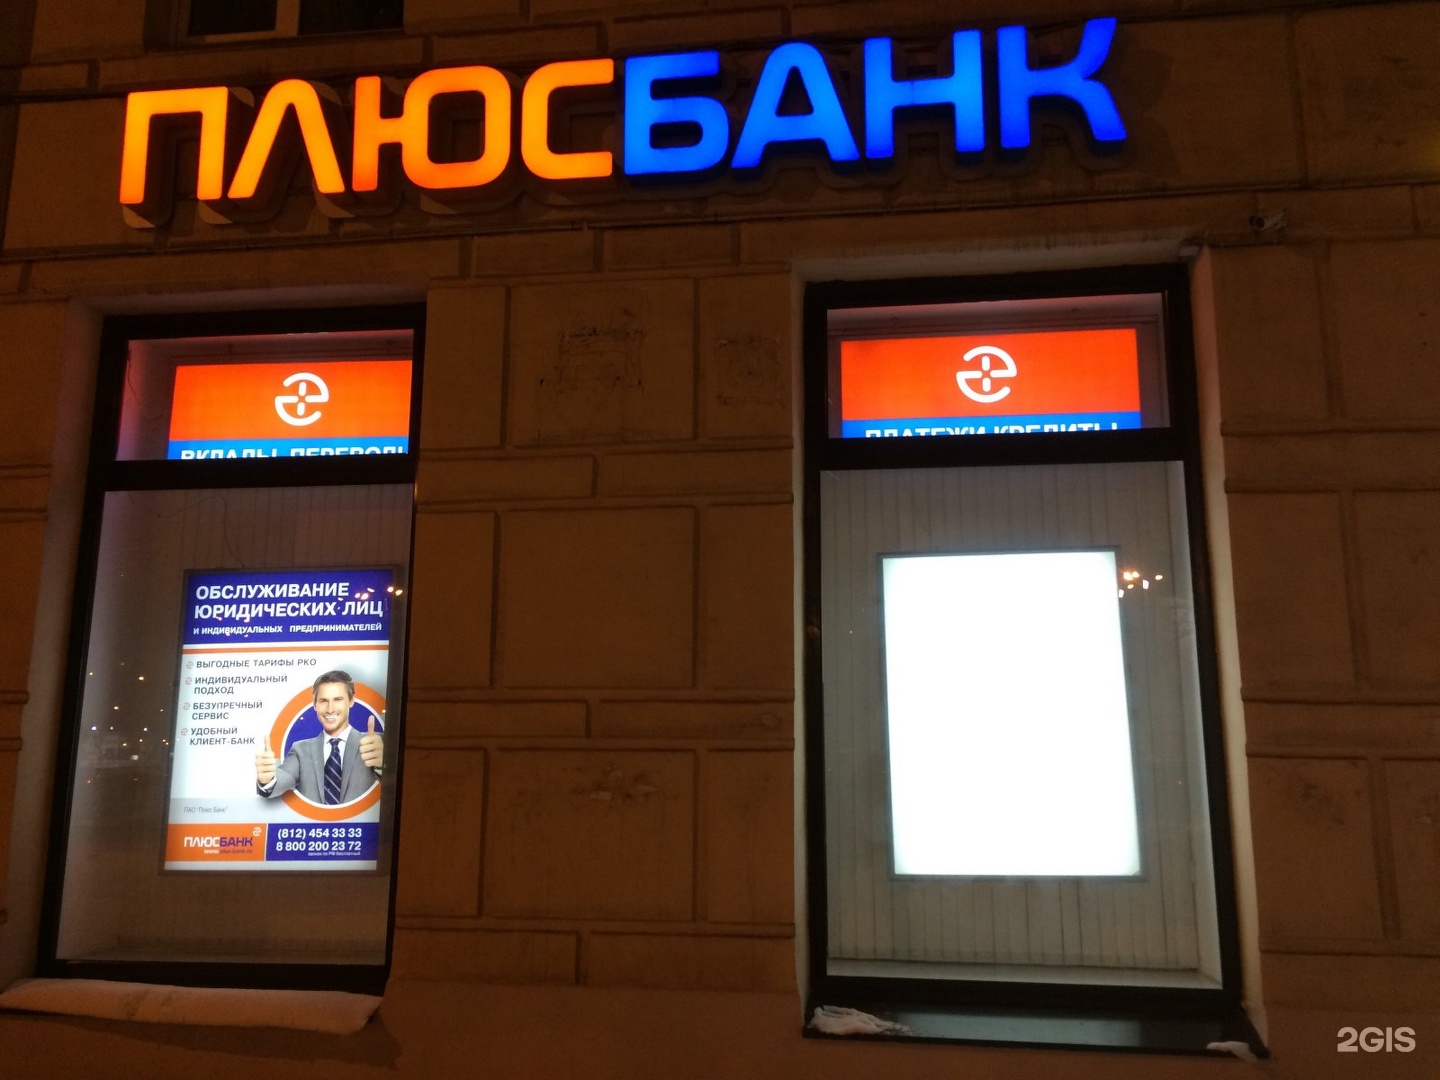 Plus banking. Плюс банк. Плюс банк Омск.